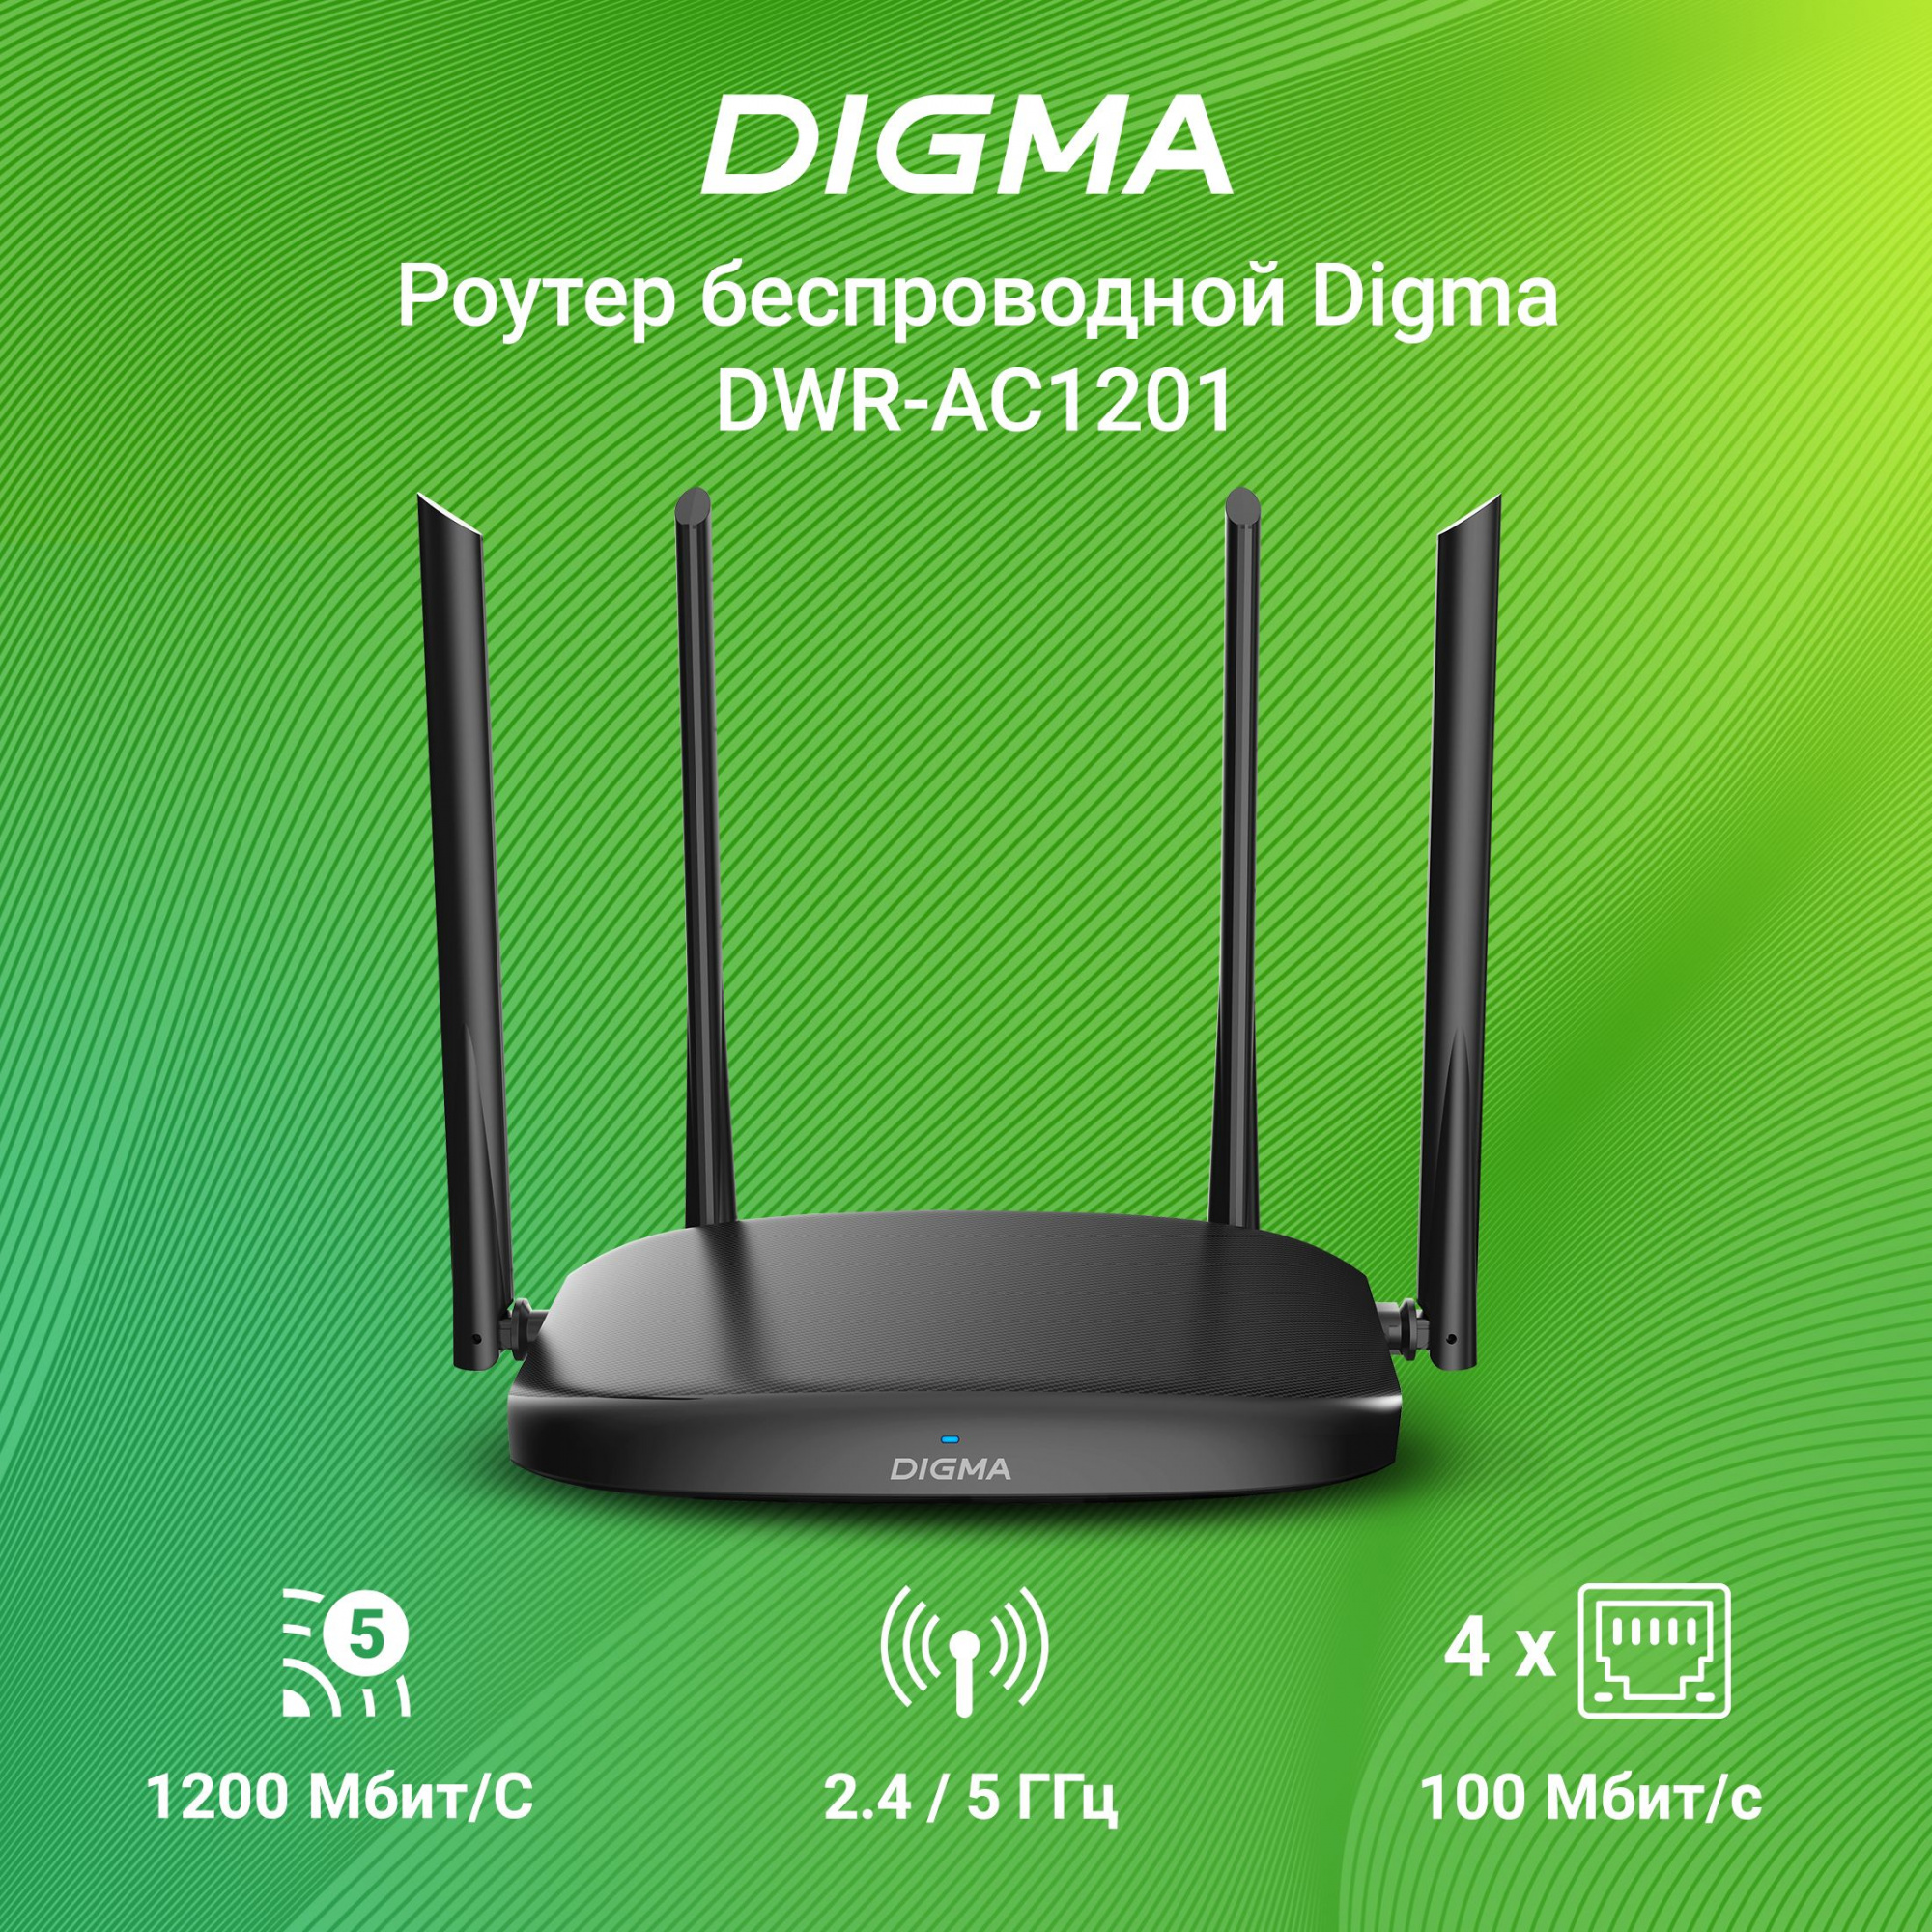 Wi-Fi  Digma DWR-AC1201,  AC1200,  